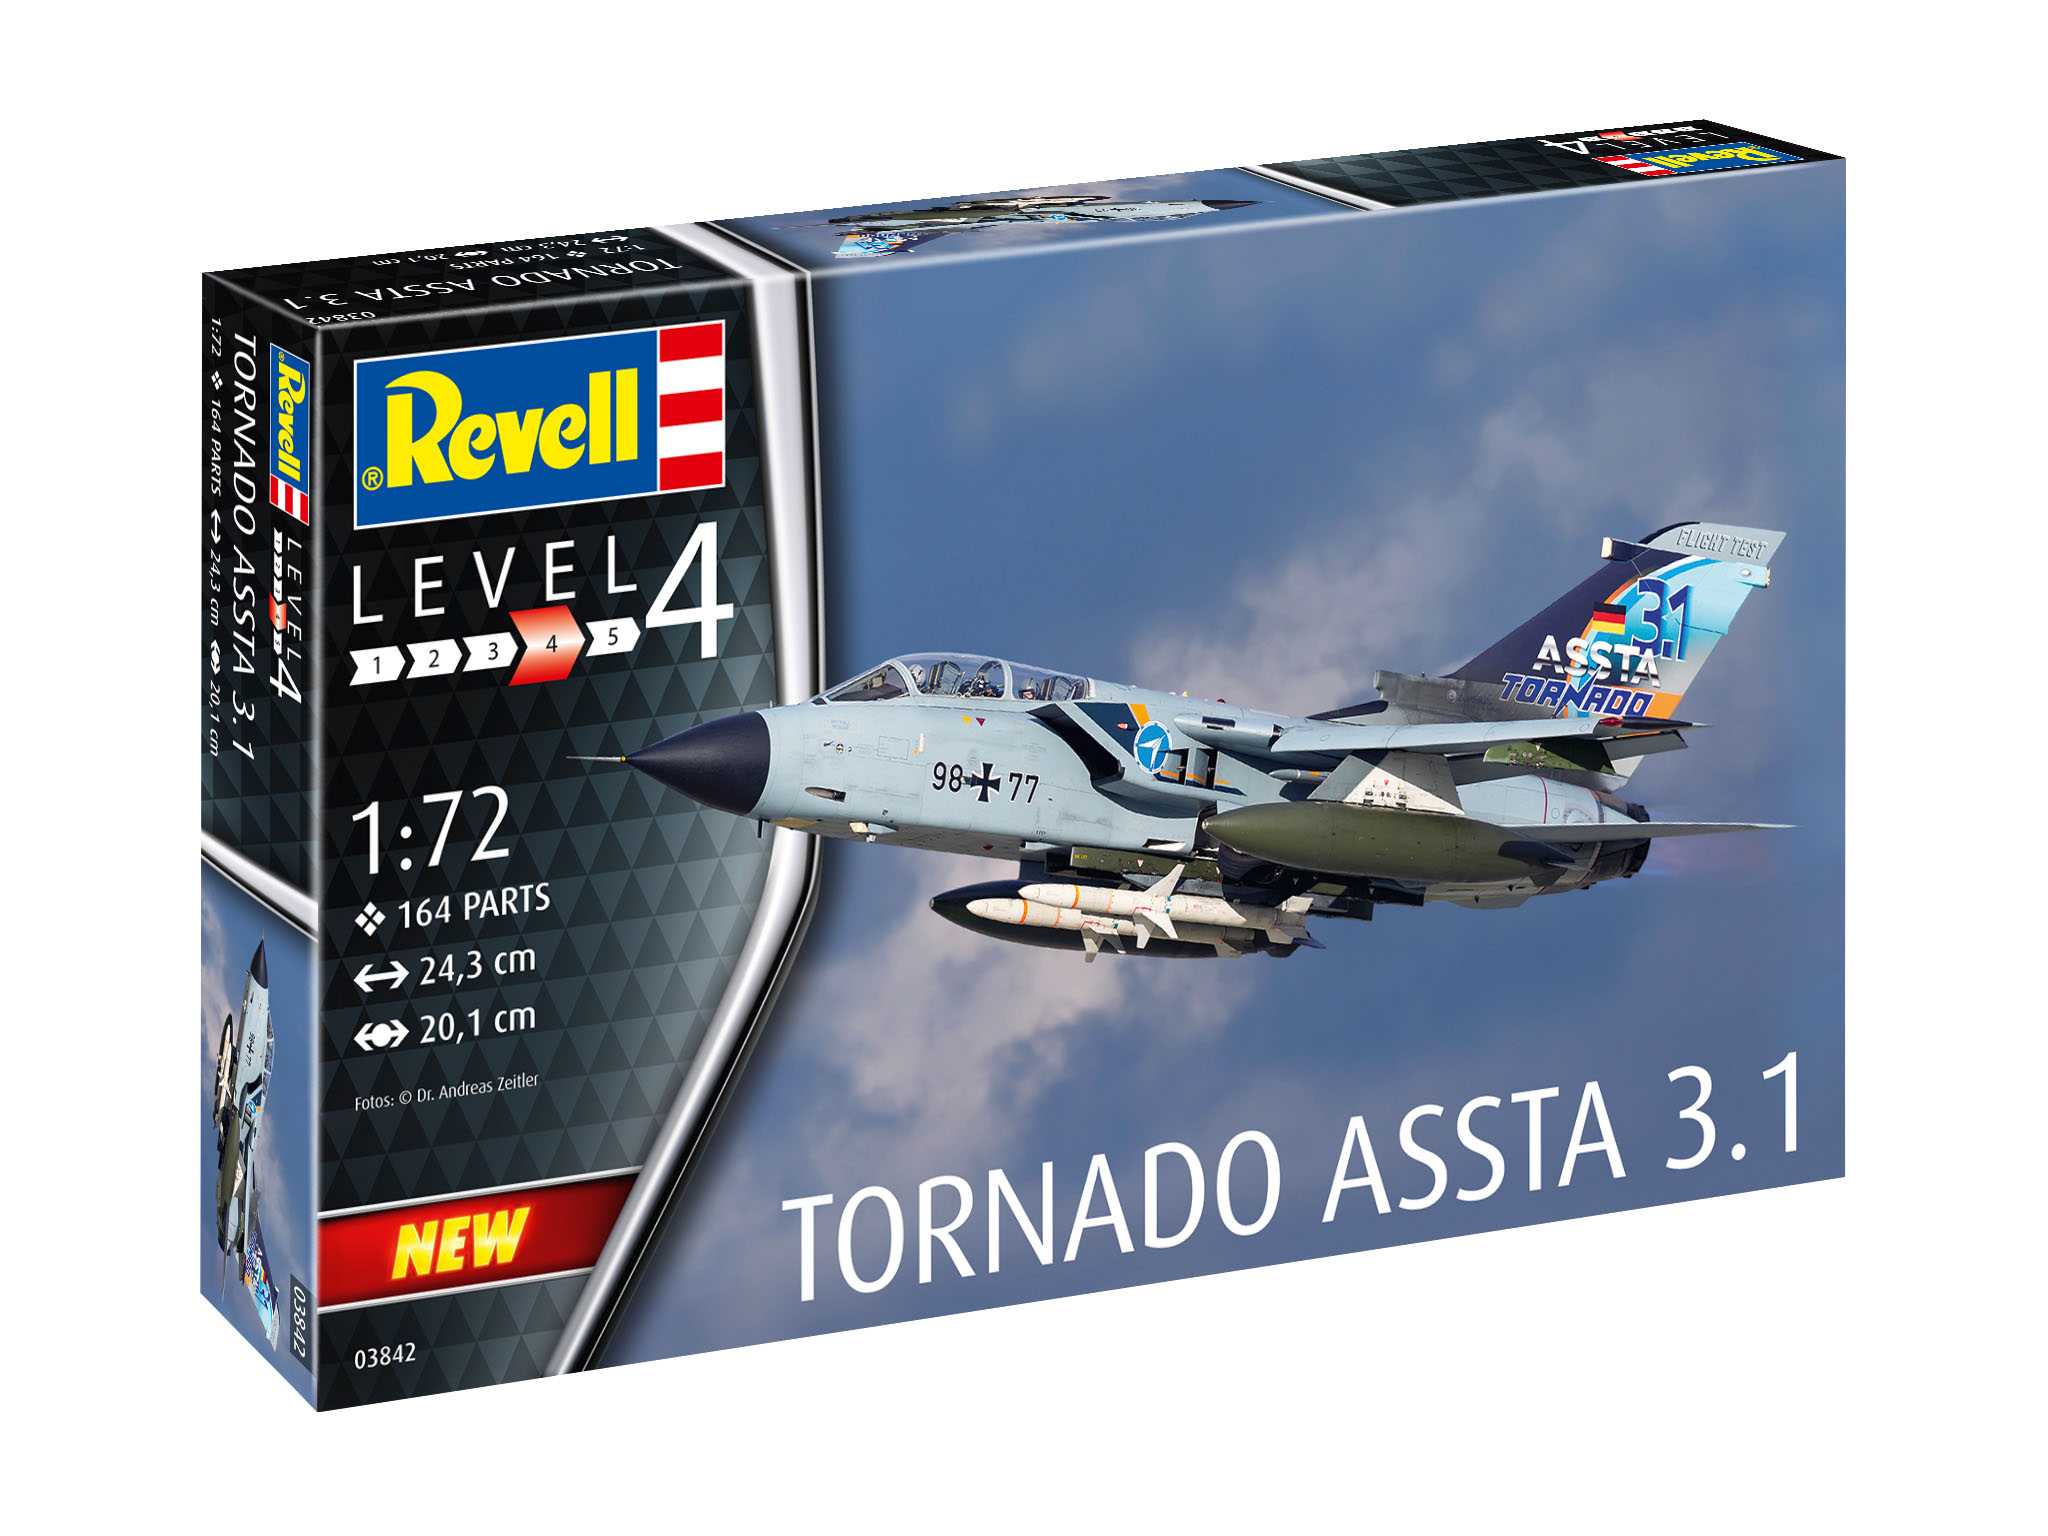 Revell 03842 - Tornado ASSTA 3.1 (1:72)